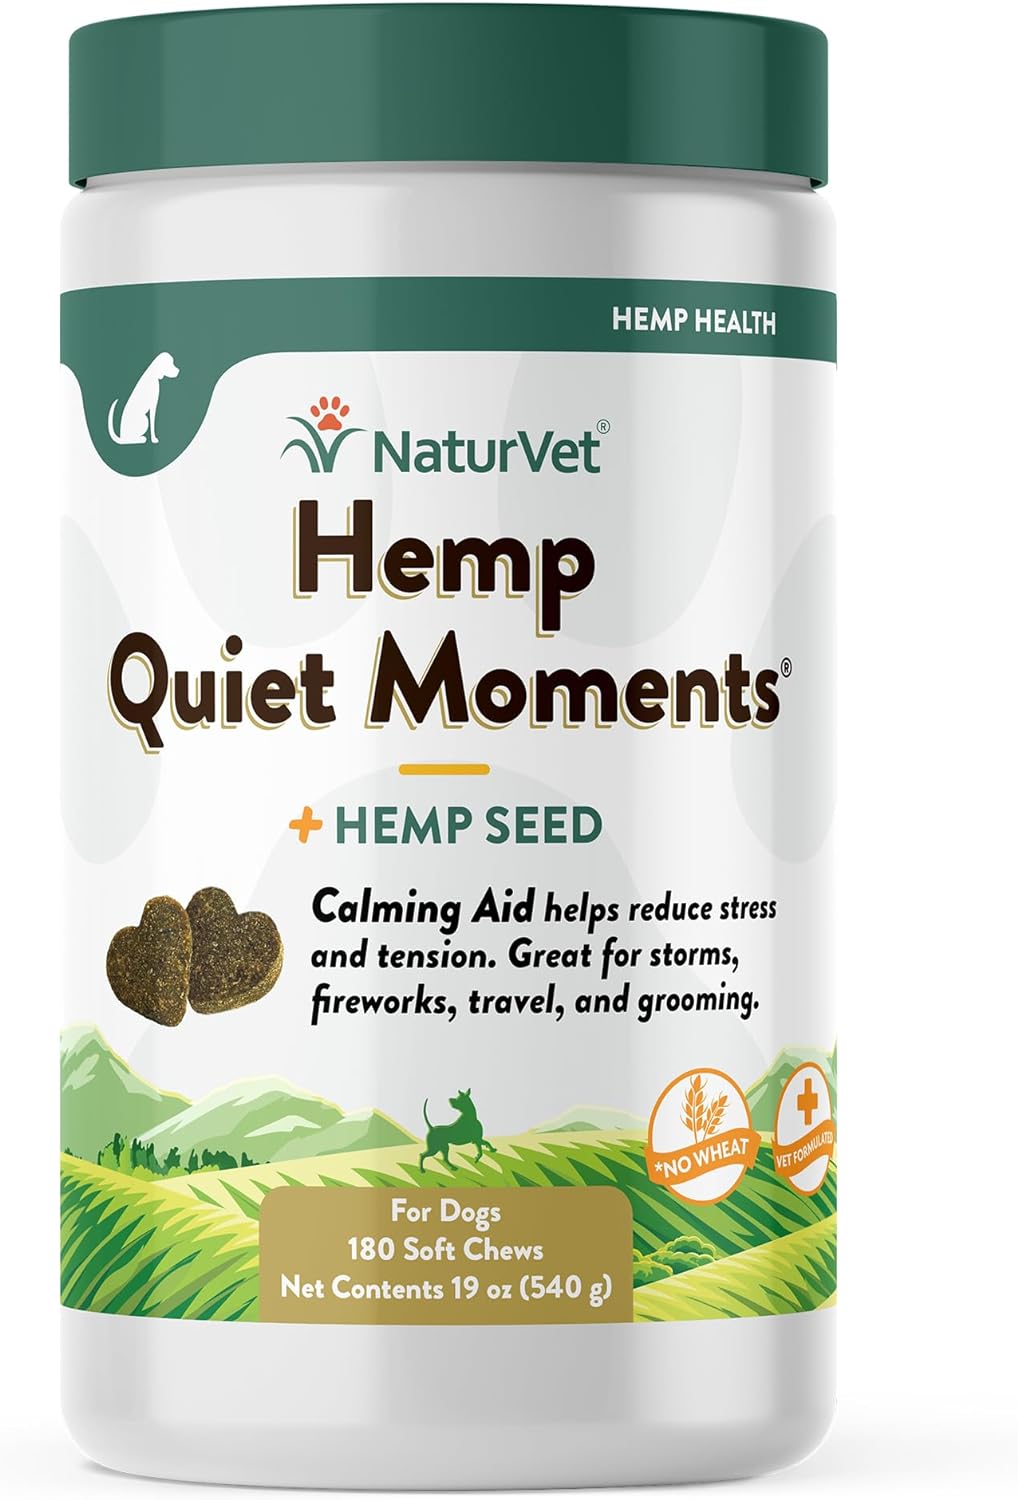 NaturVet Hemp Quiet Moments Soft Chews